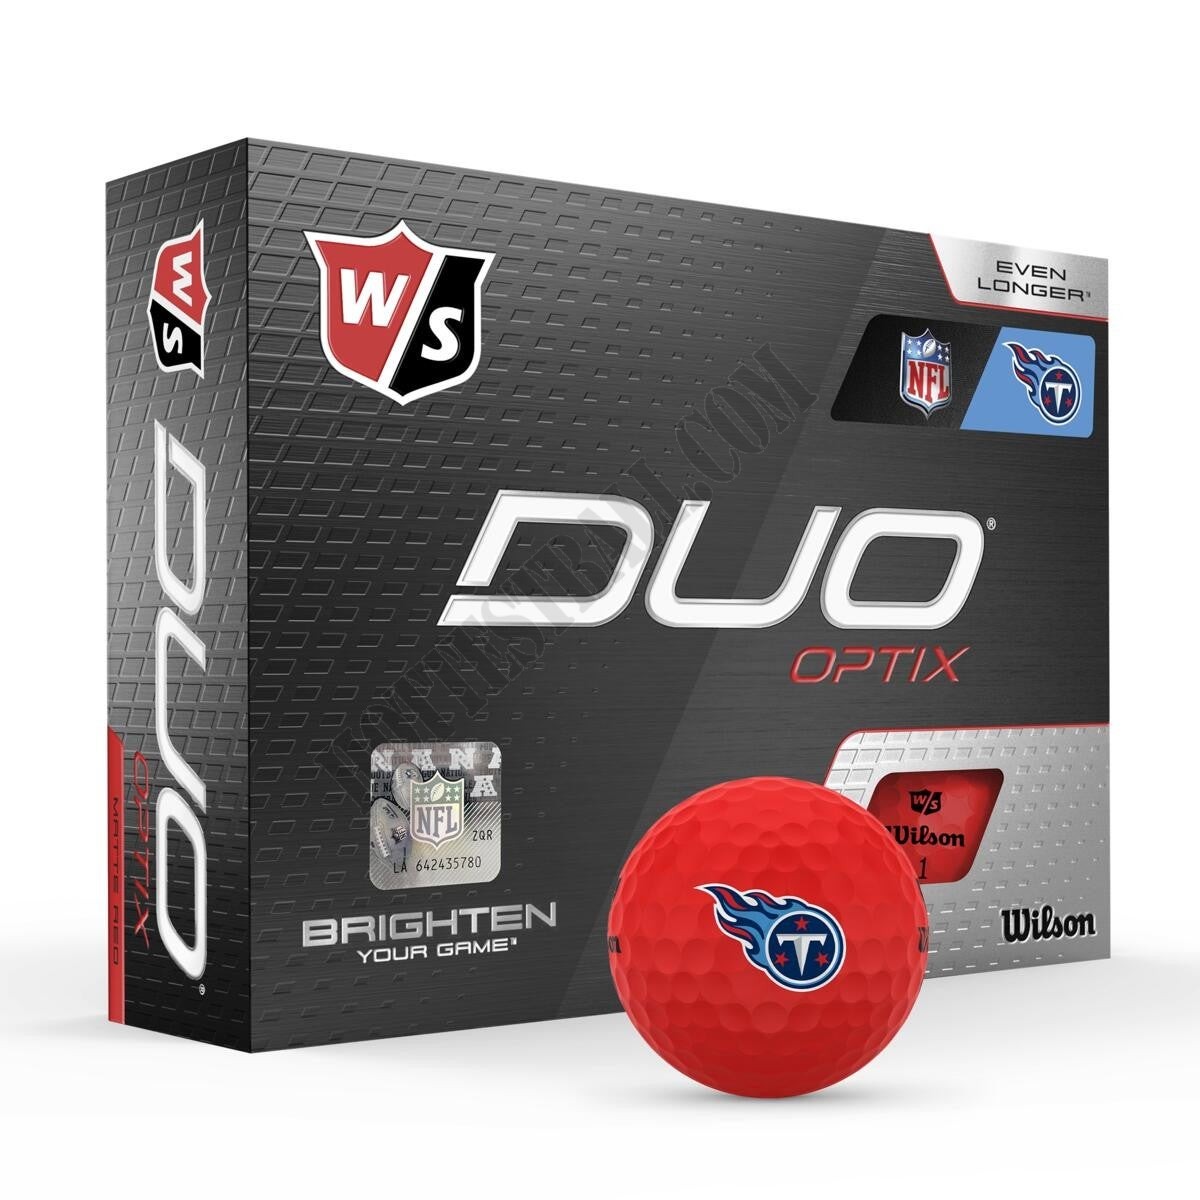 Duo Optix NFL Golf Balls - Tennessee Titans ● Wilson Promotions - Duo Optix NFL Golf Balls - Tennessee Titans ● Wilson Promotions